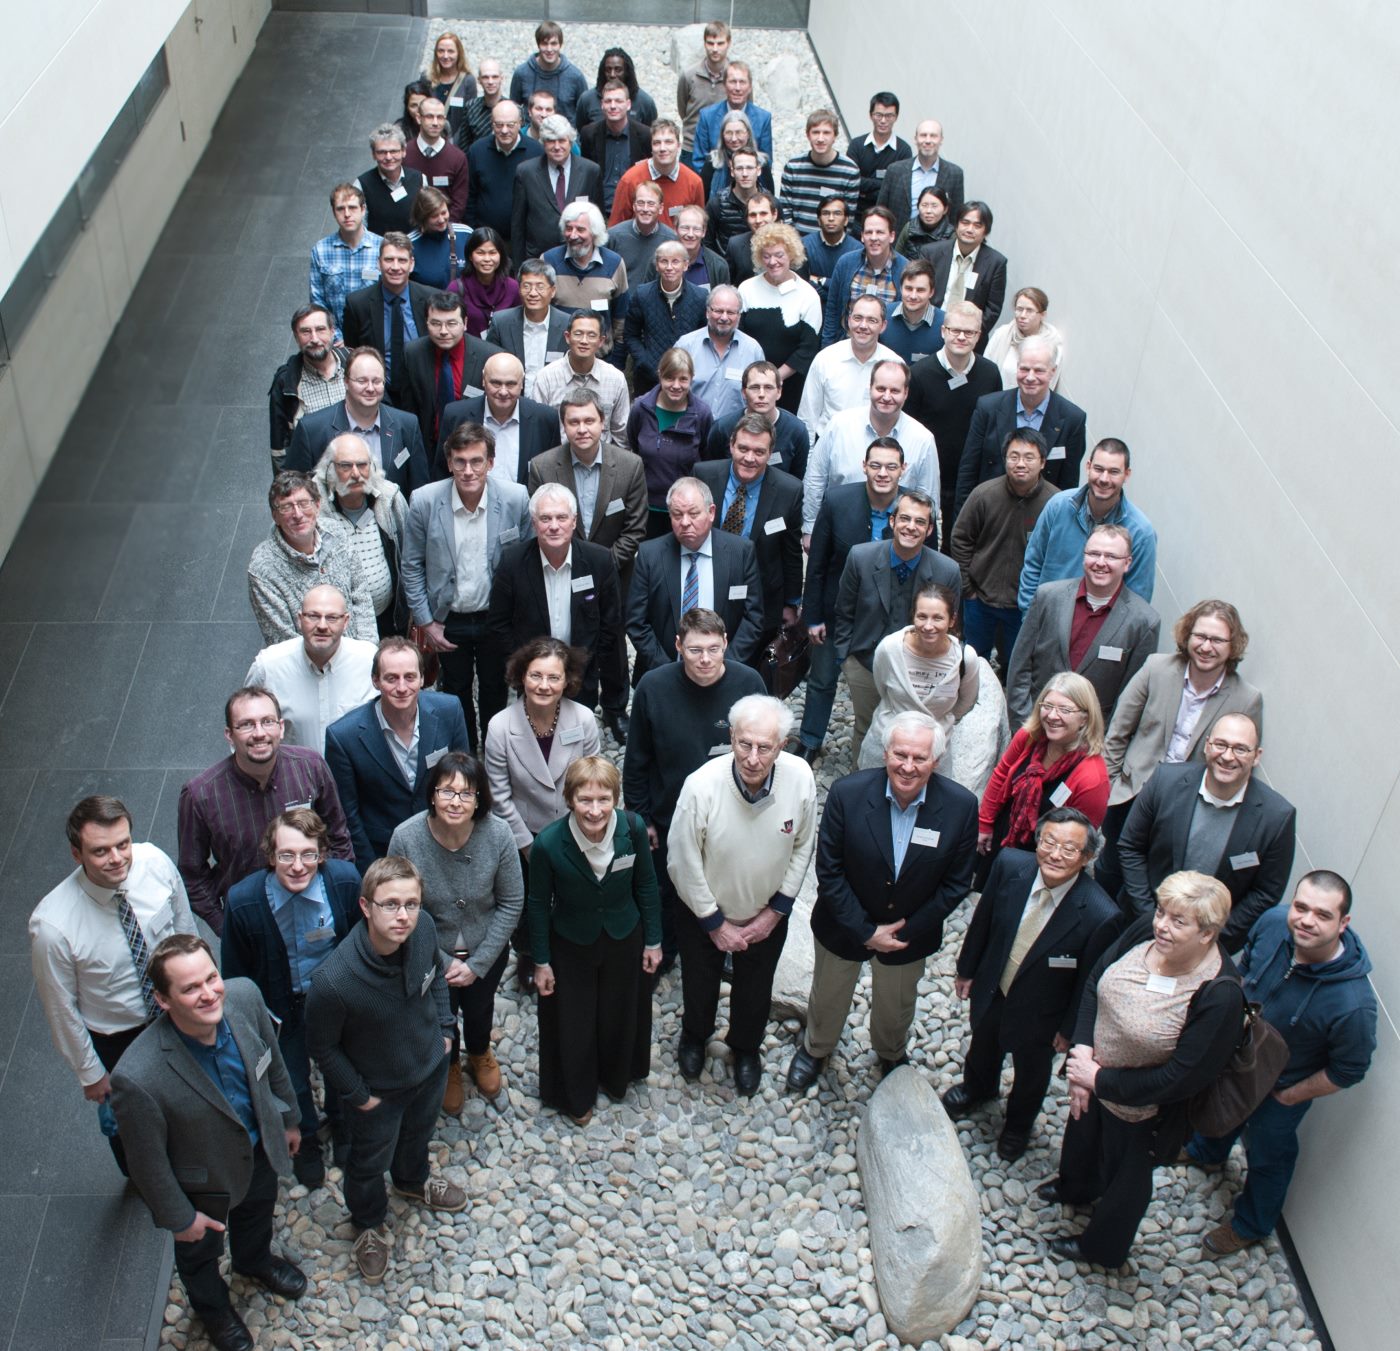 Group photo of participants of SALVE symposium 2013